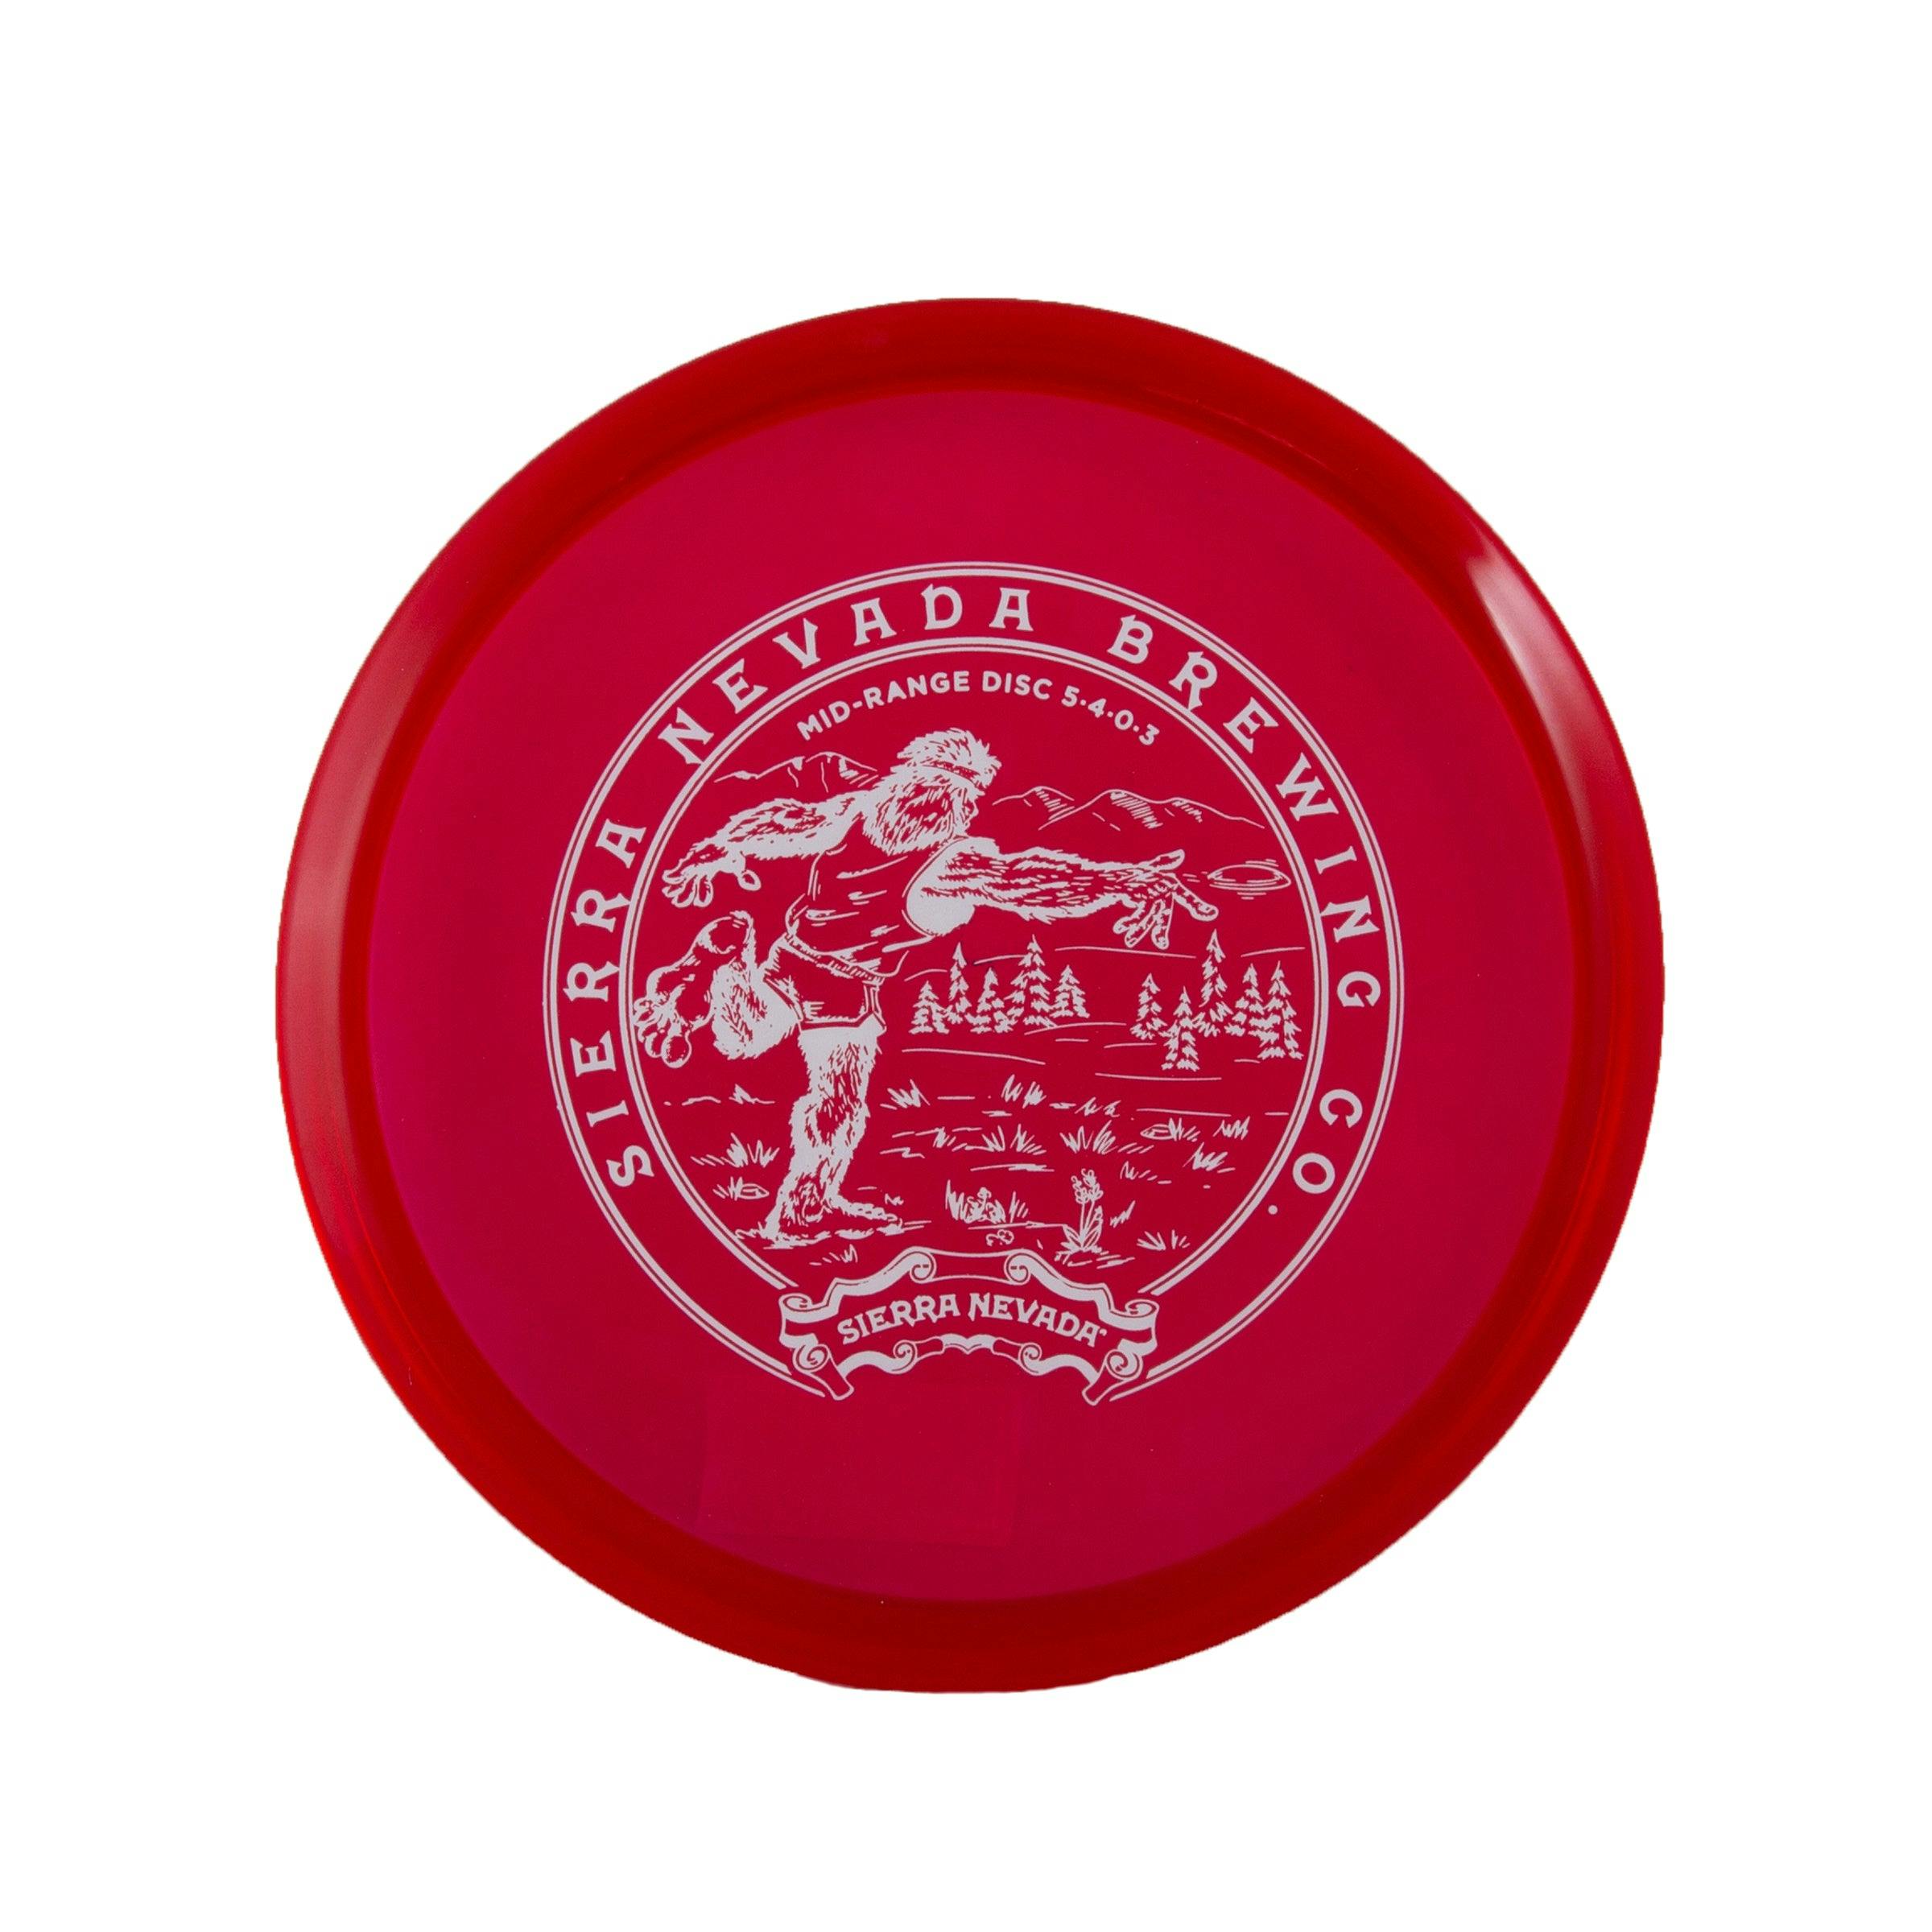 Sierra Nevada disc golf disc - red